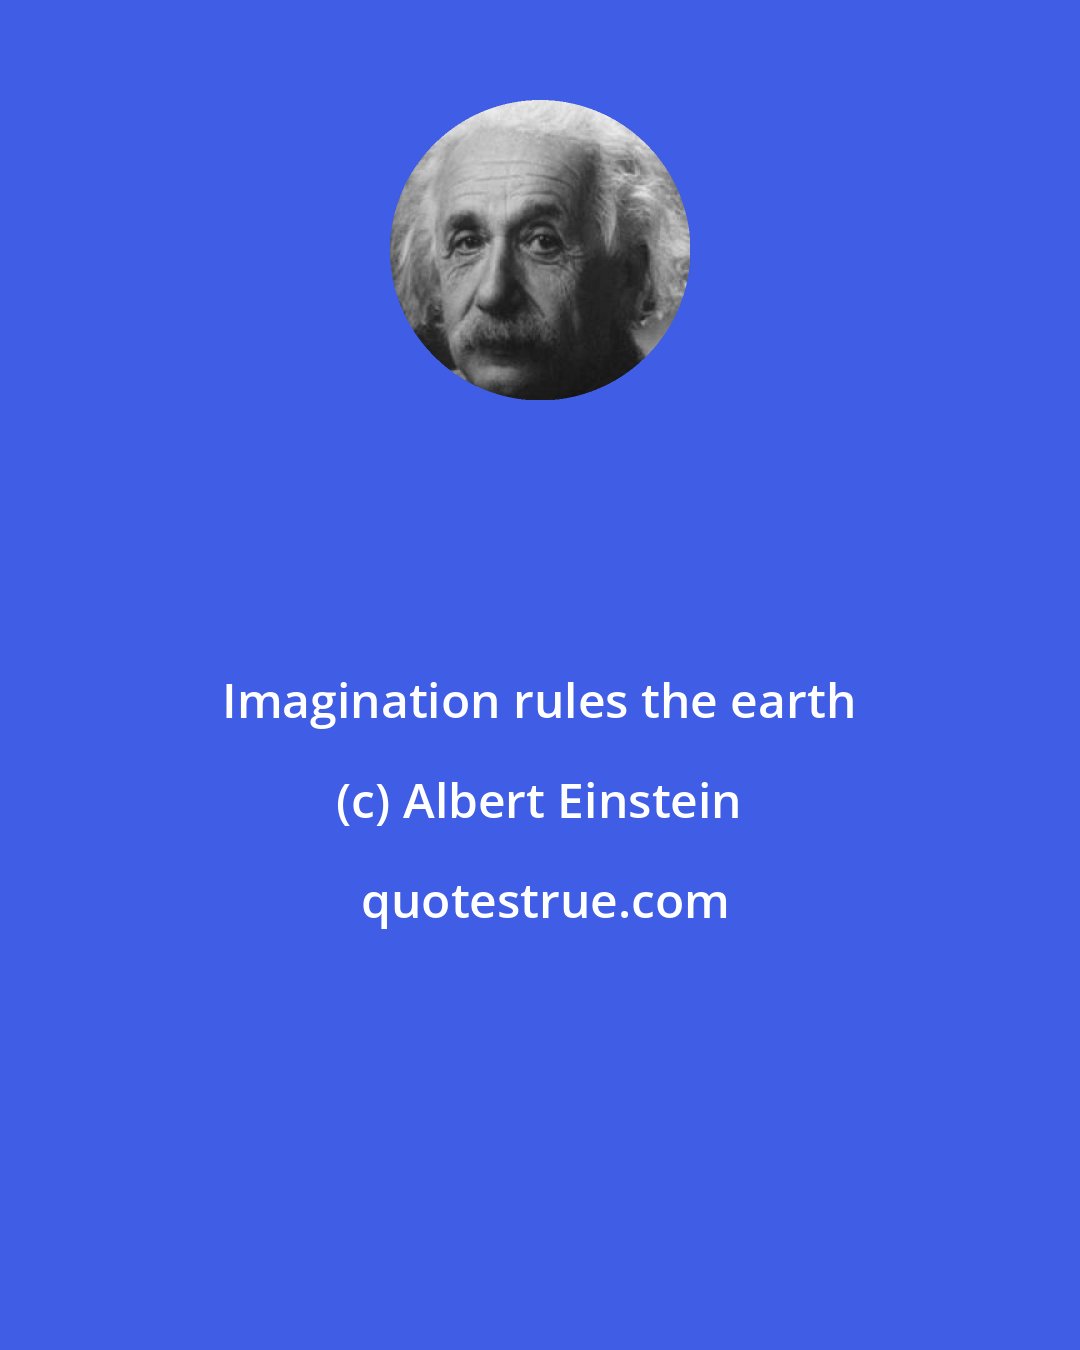 Albert Einstein: Imagination rules the earth